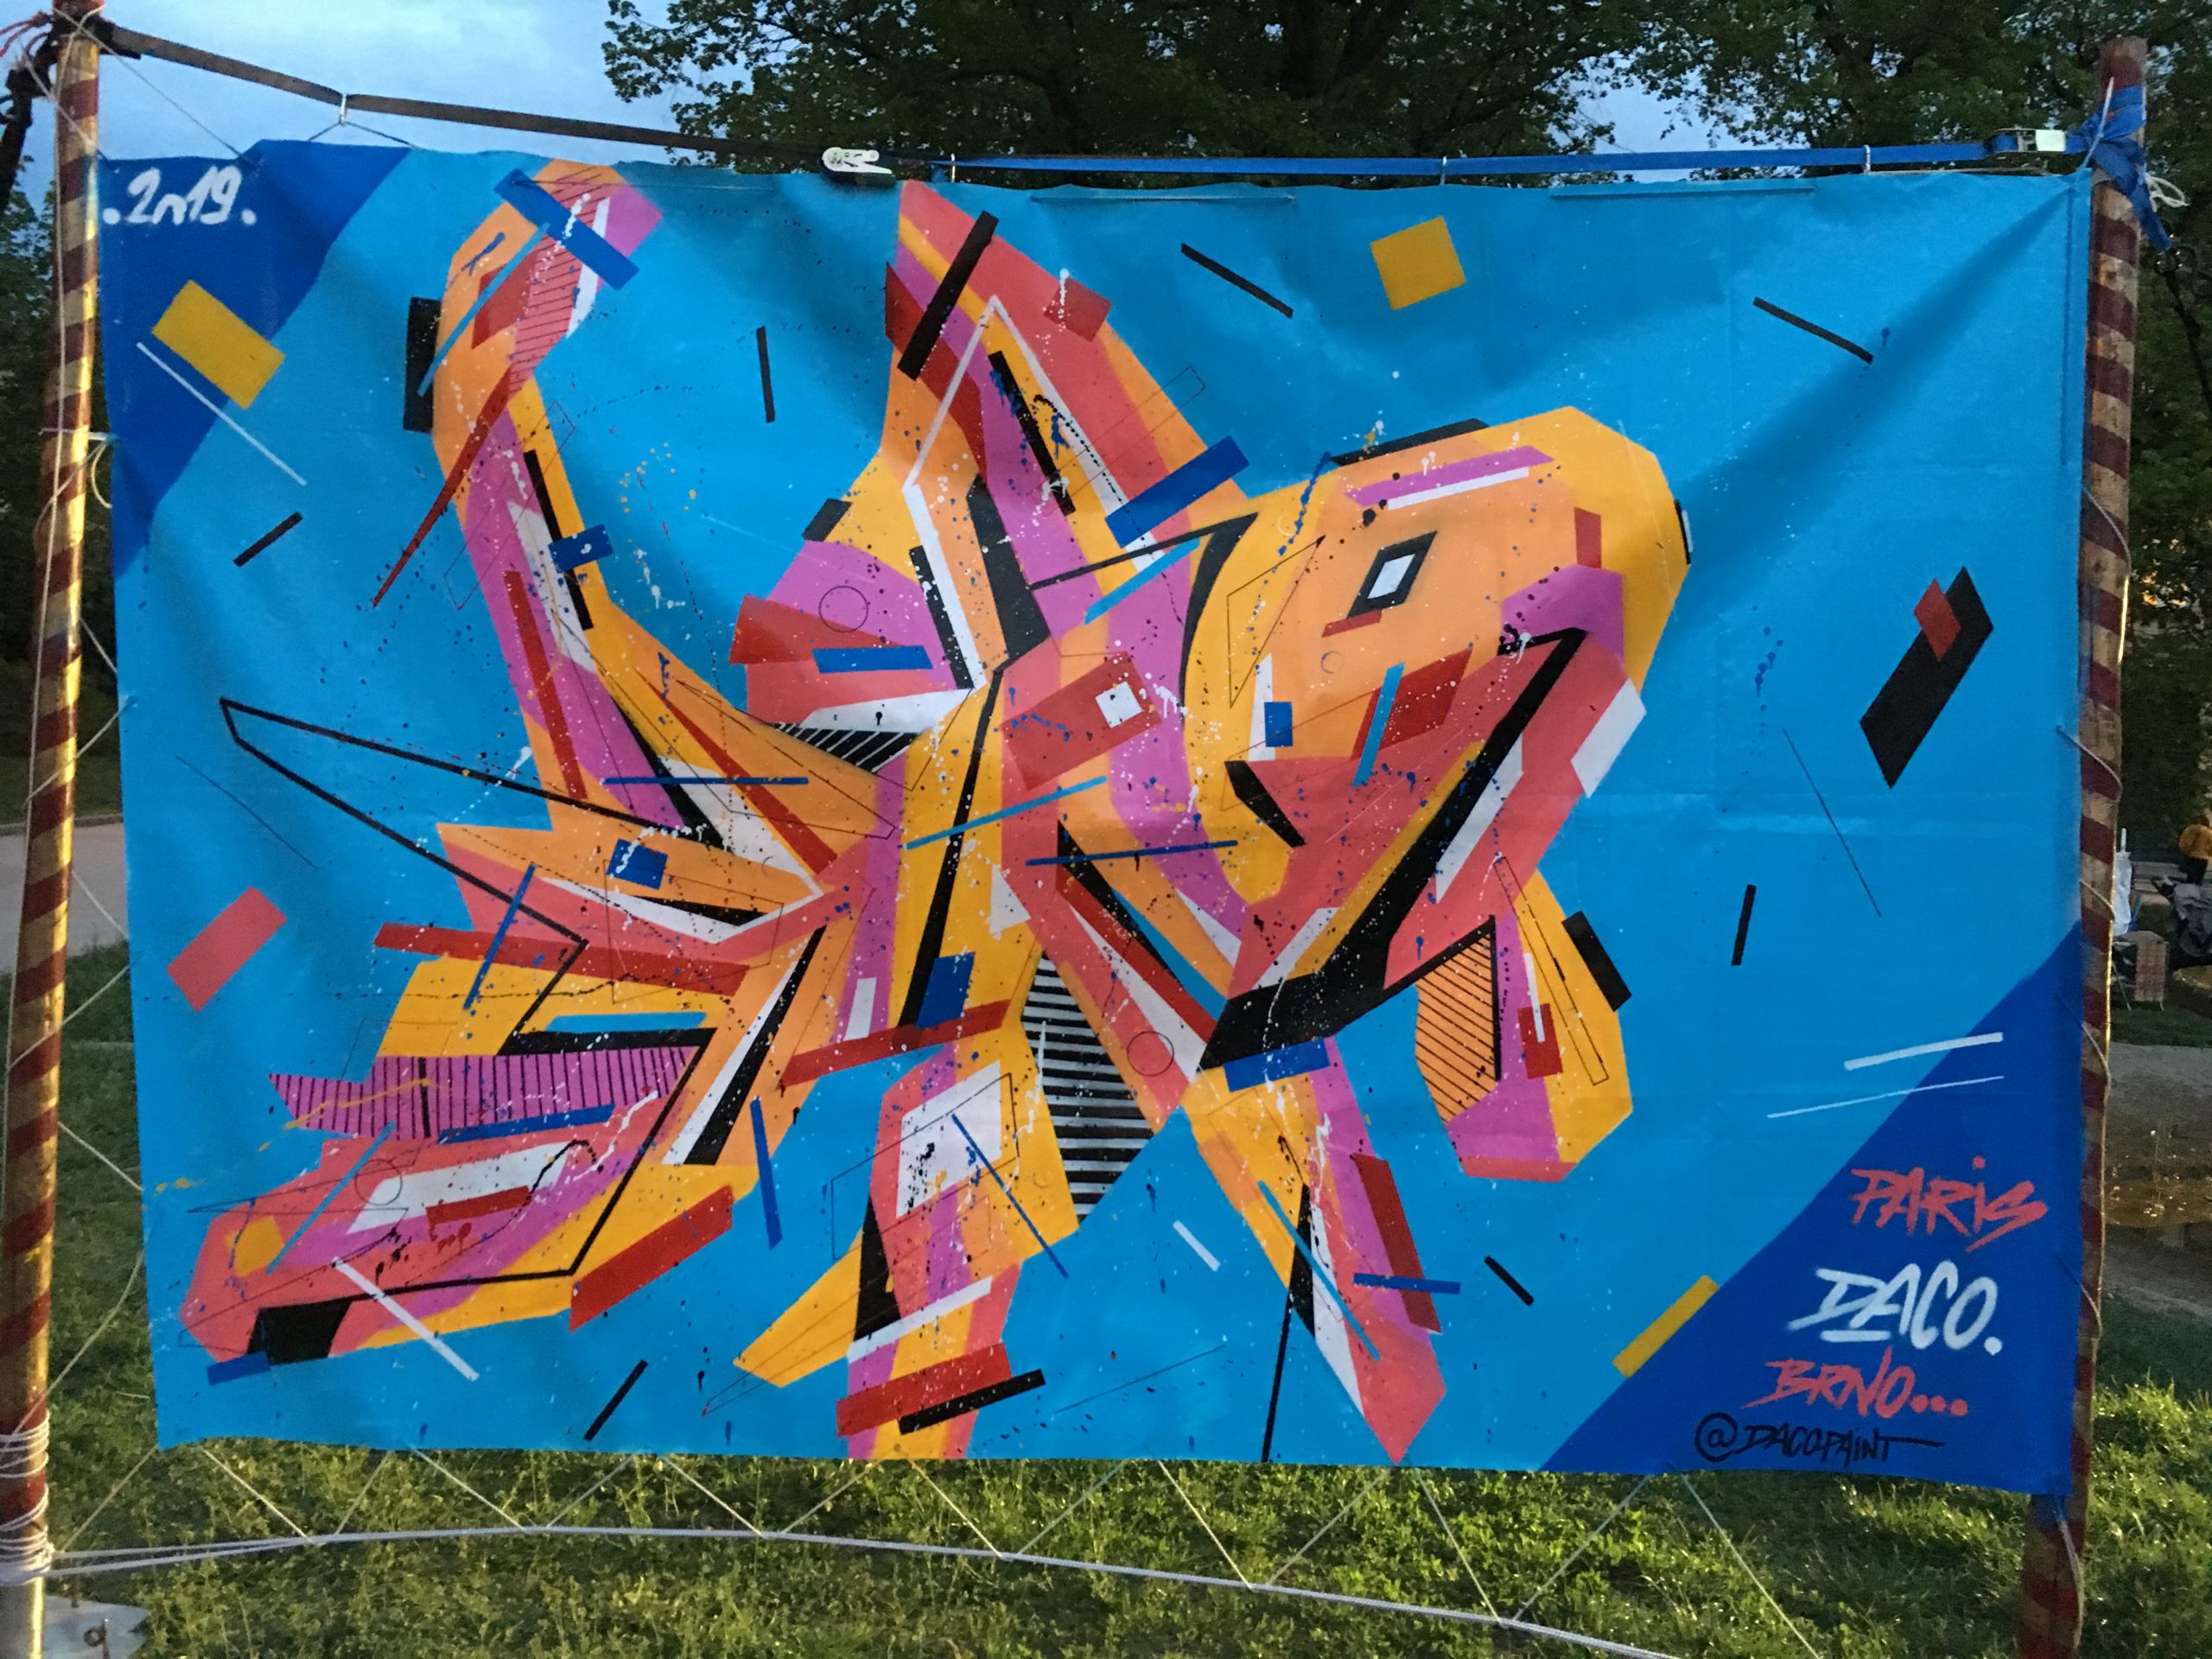 Fresque Graffaune Graffiti poisson réalisée par Daco